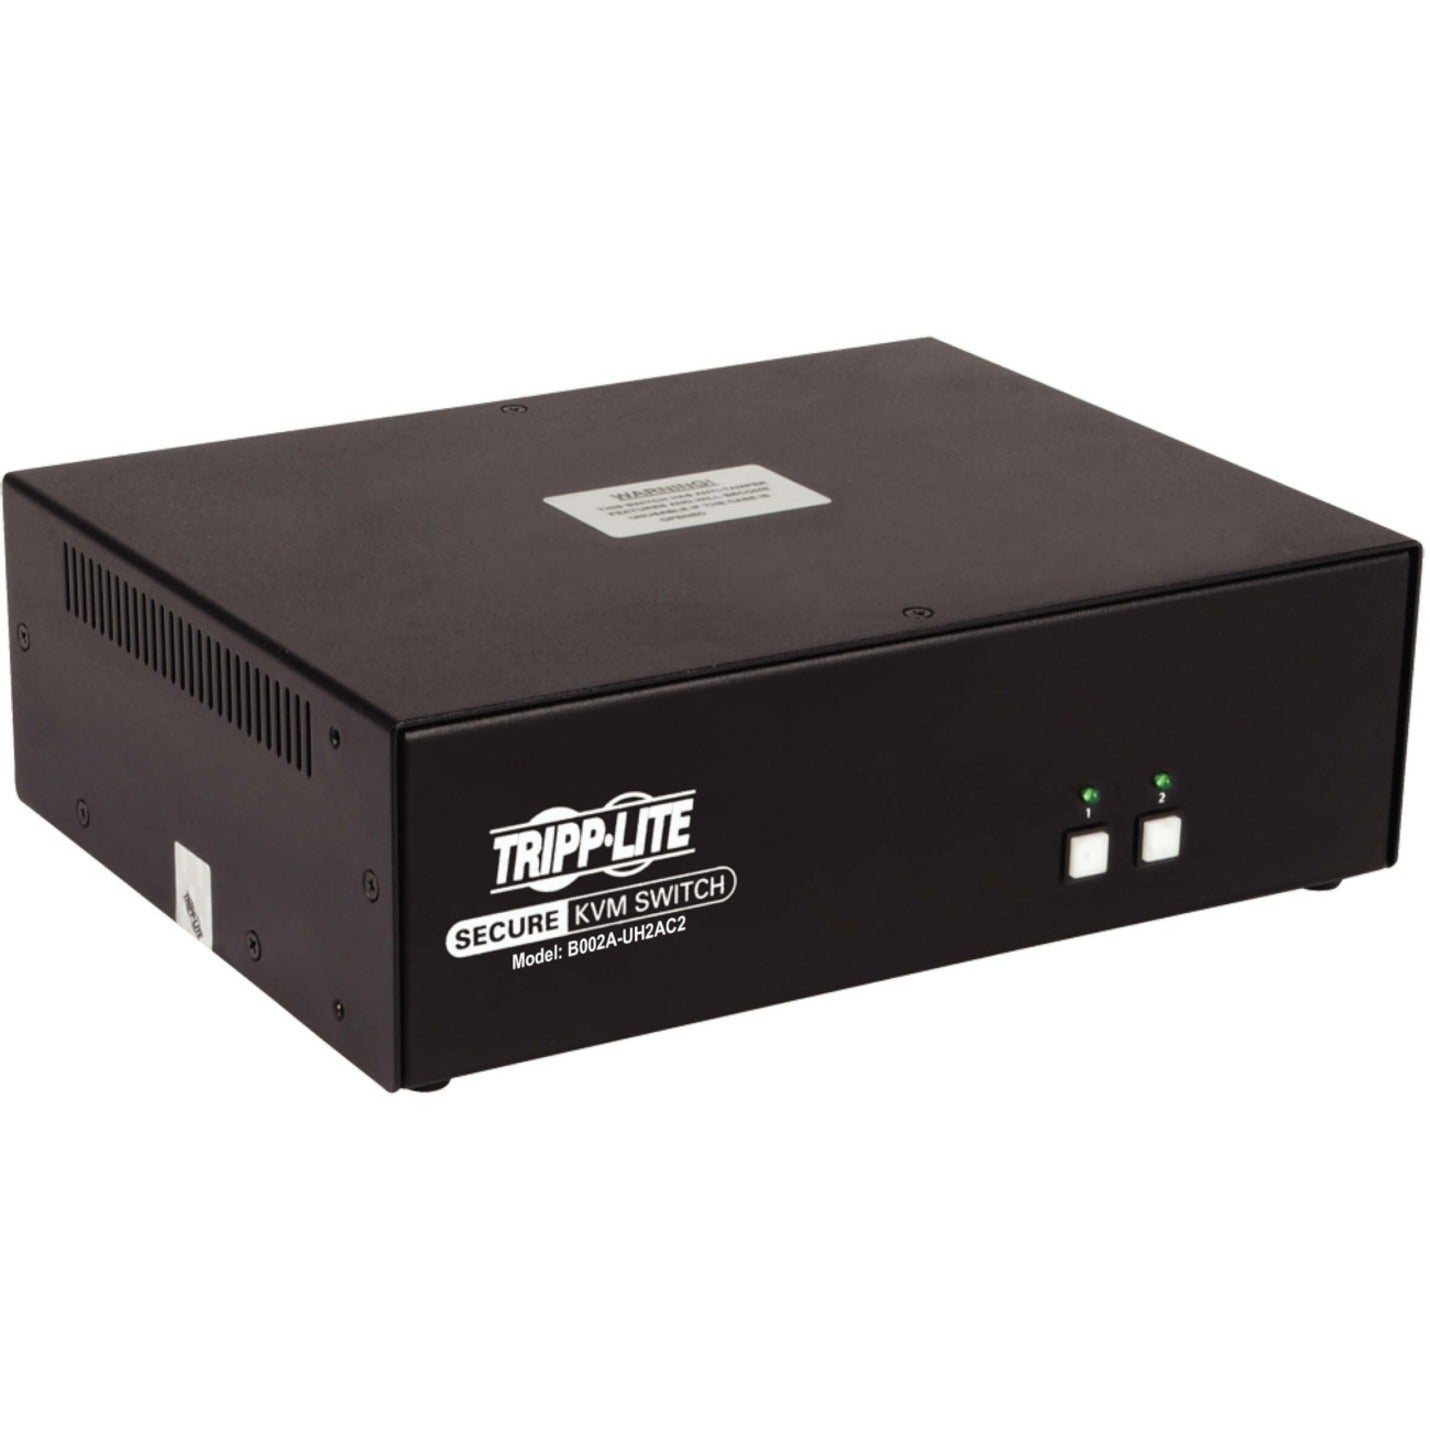 Marca: Tripp Lite Conmutador KVM seguro de doble monitor de 2 puertos B002A-UH2AC2 HDMI - 4K NIAP PP3.0 Audio CAC TAA